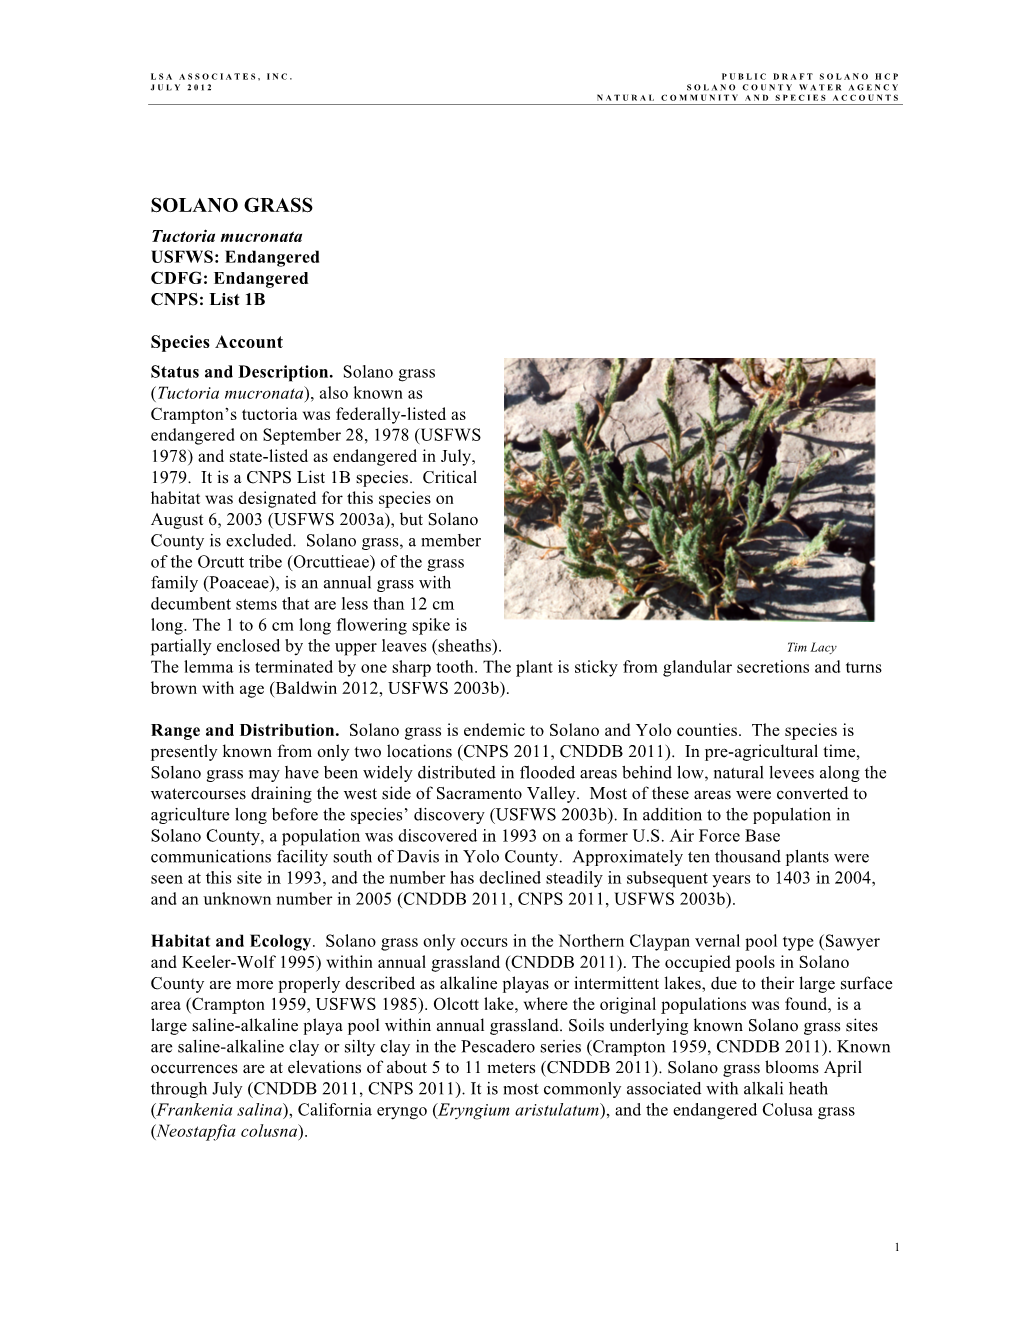 SOLANO GRASS Tuctoria Mucronata USFWS: Endangered CDFG: Endangered CNPS: List 1B